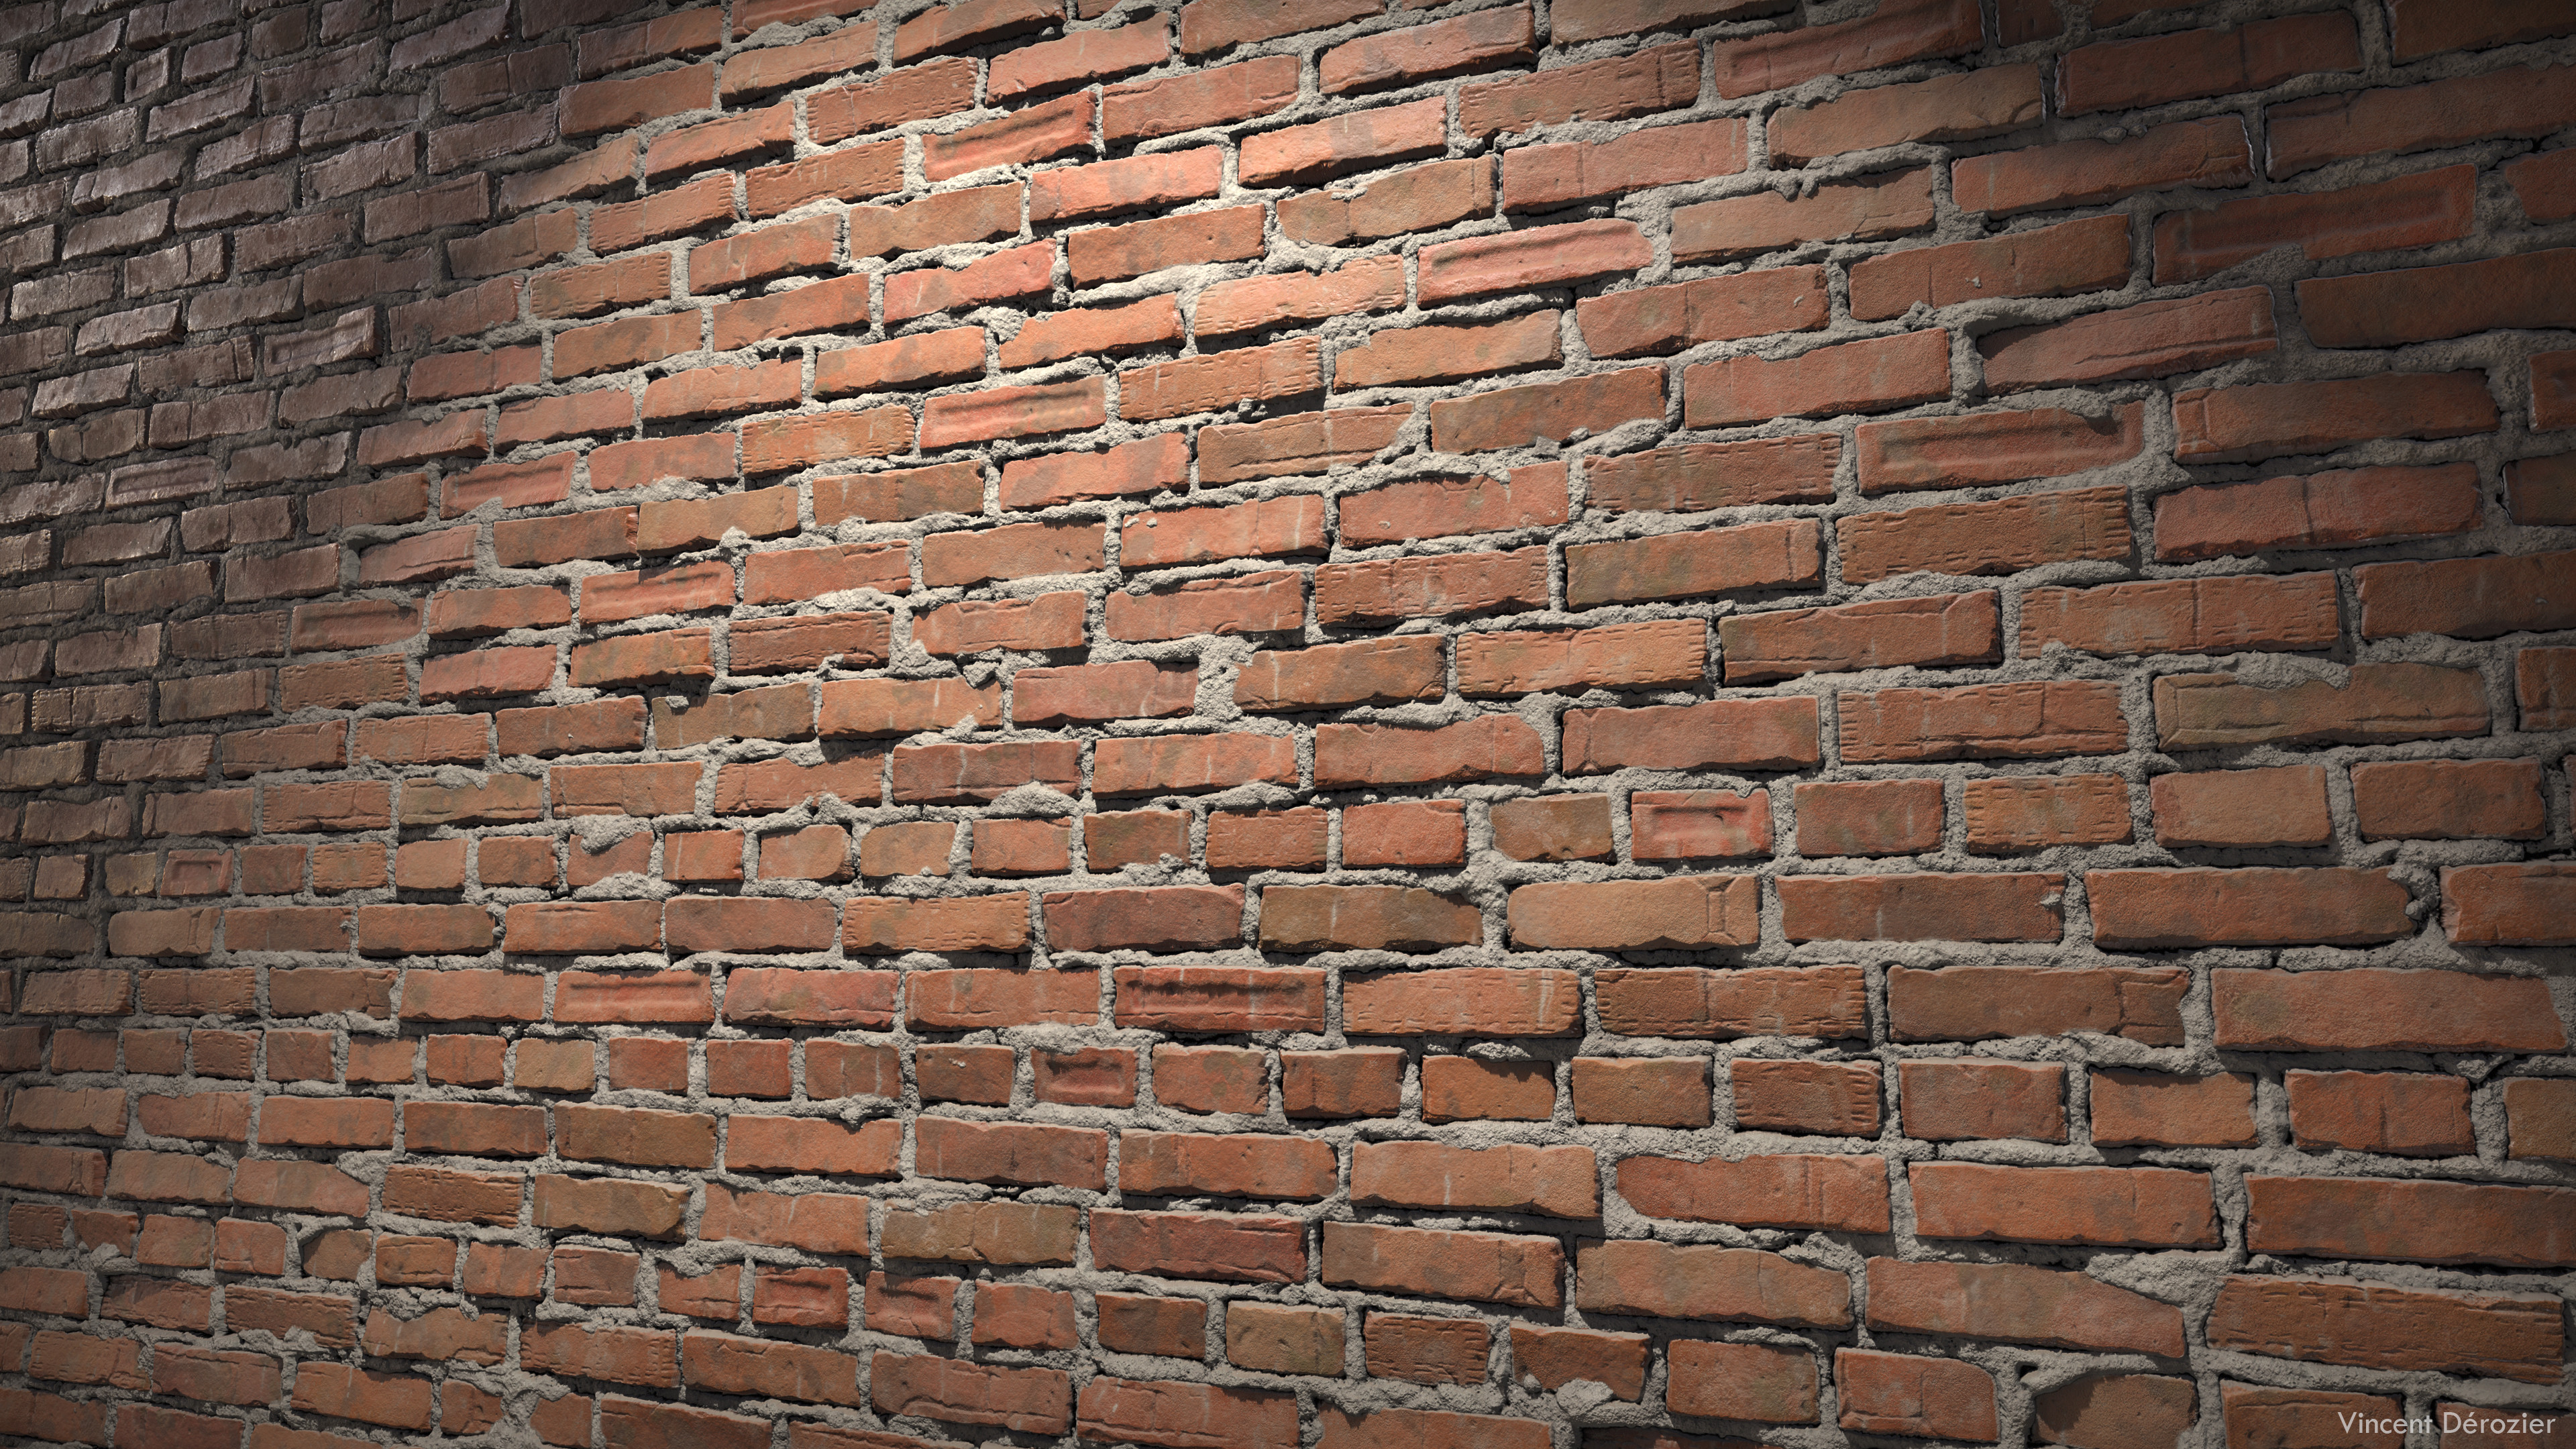 General 3840x2160 Vincent Dérozier CGI bricks texture shadow construction wall